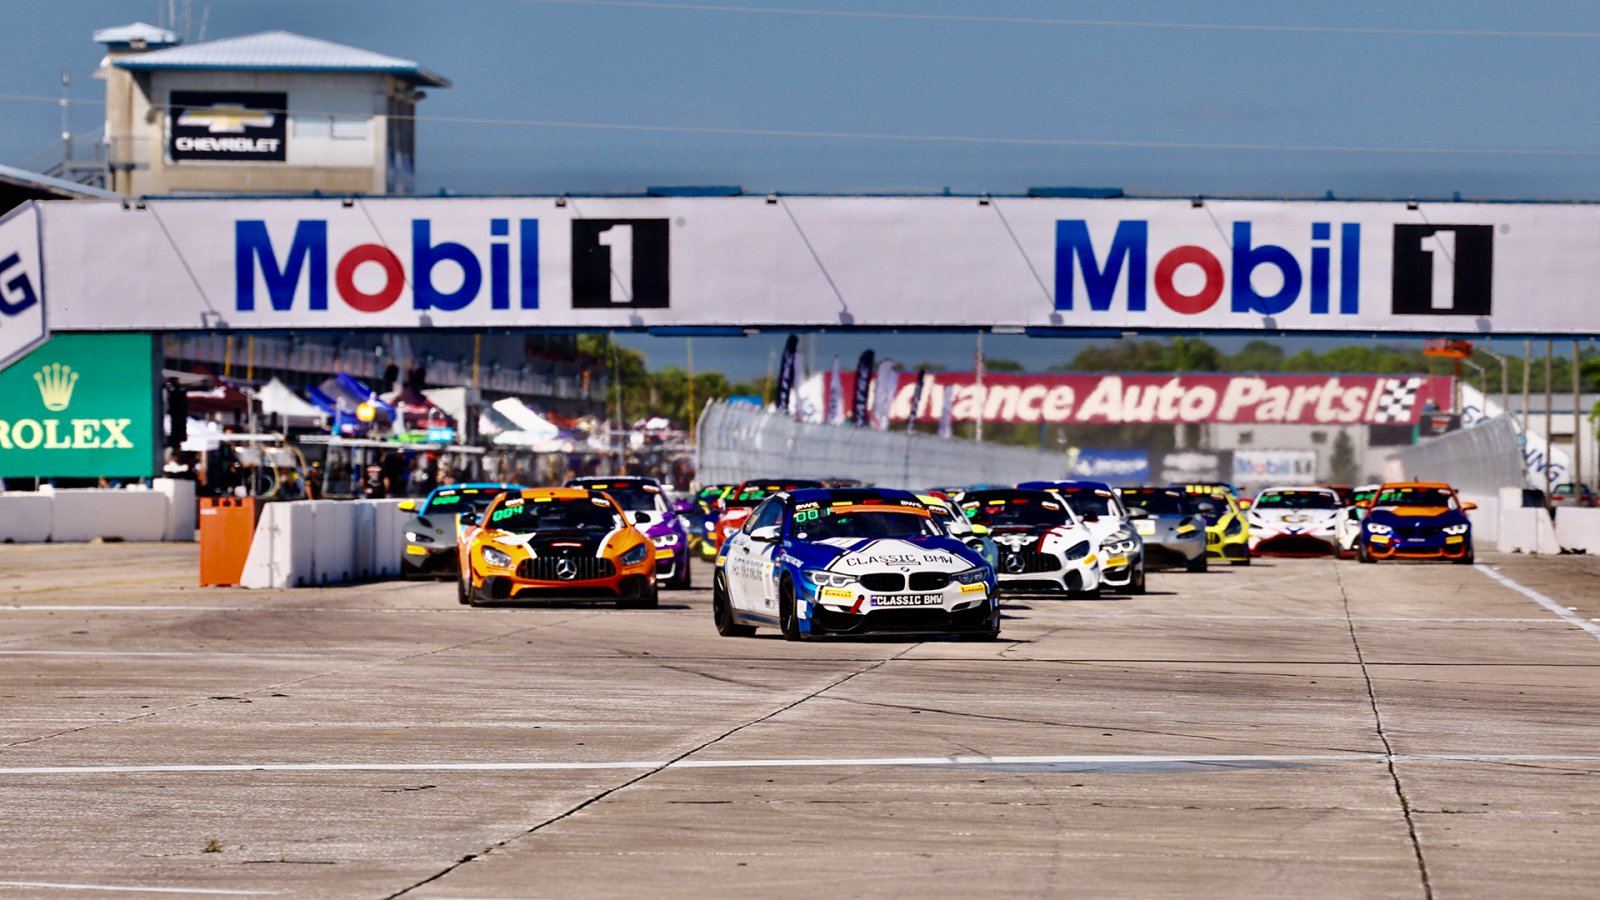 Mercedes-AMG, Porsche, BMW Claim Class Victories in First Sebring Race